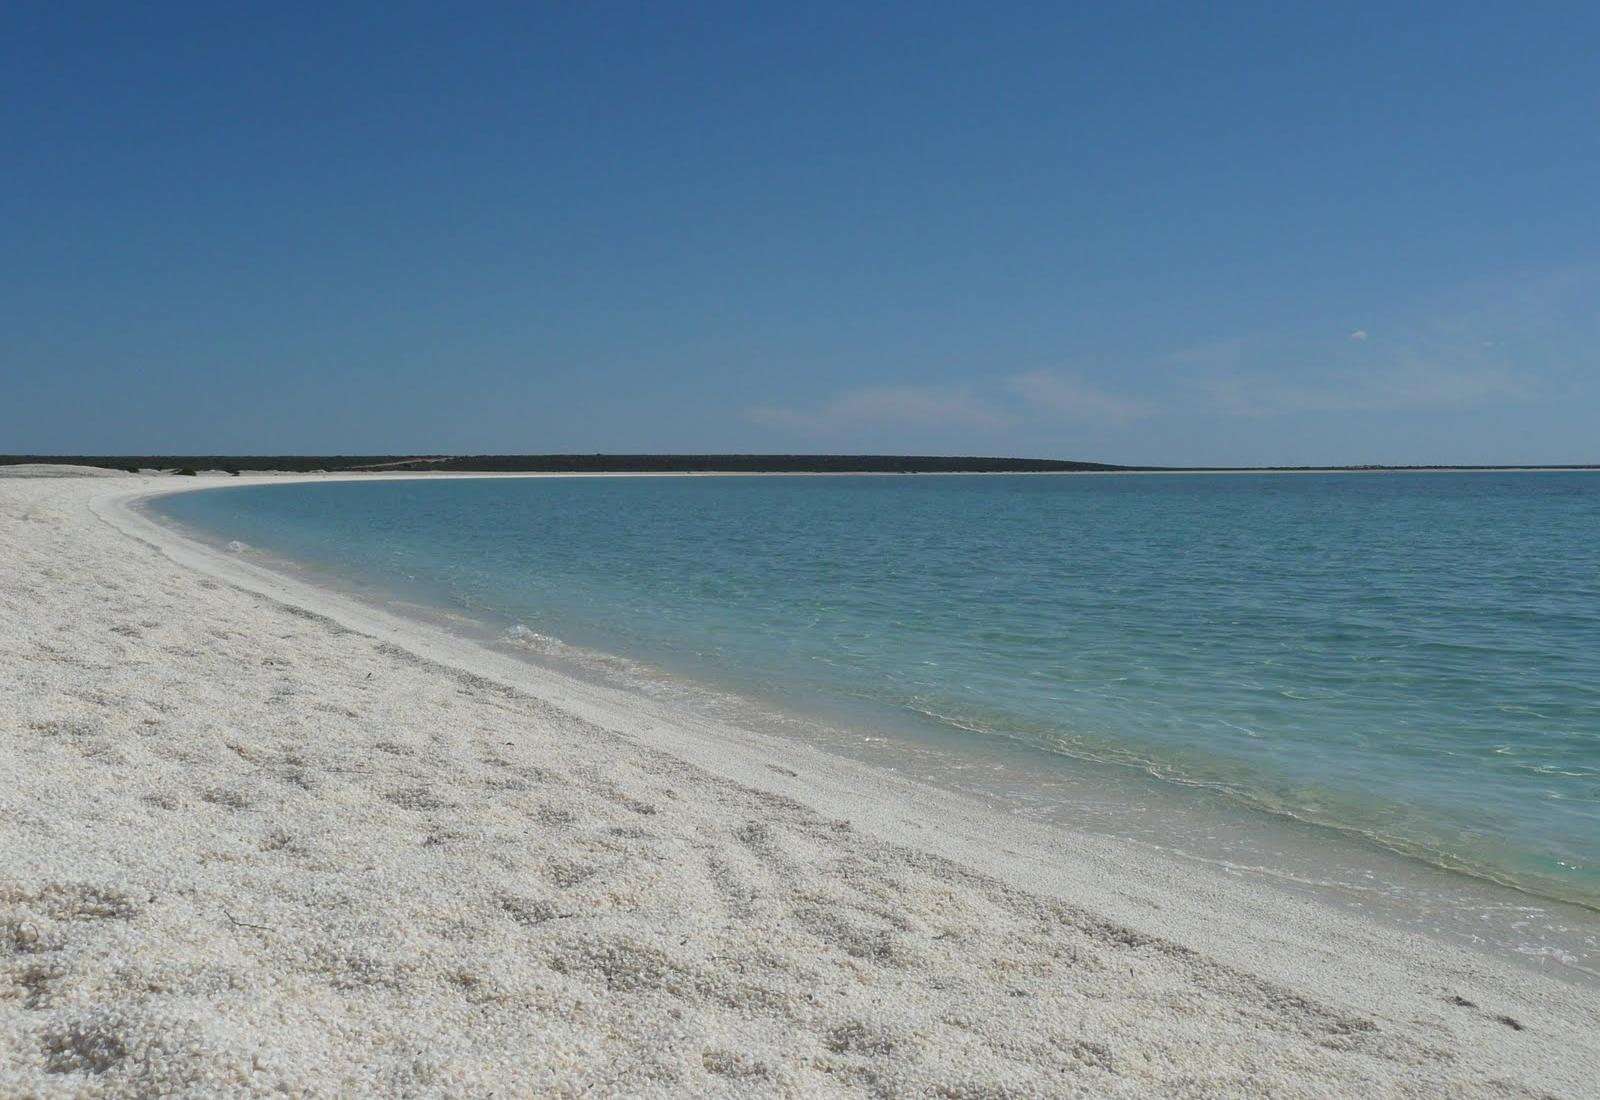 Sandee - Shell Beach